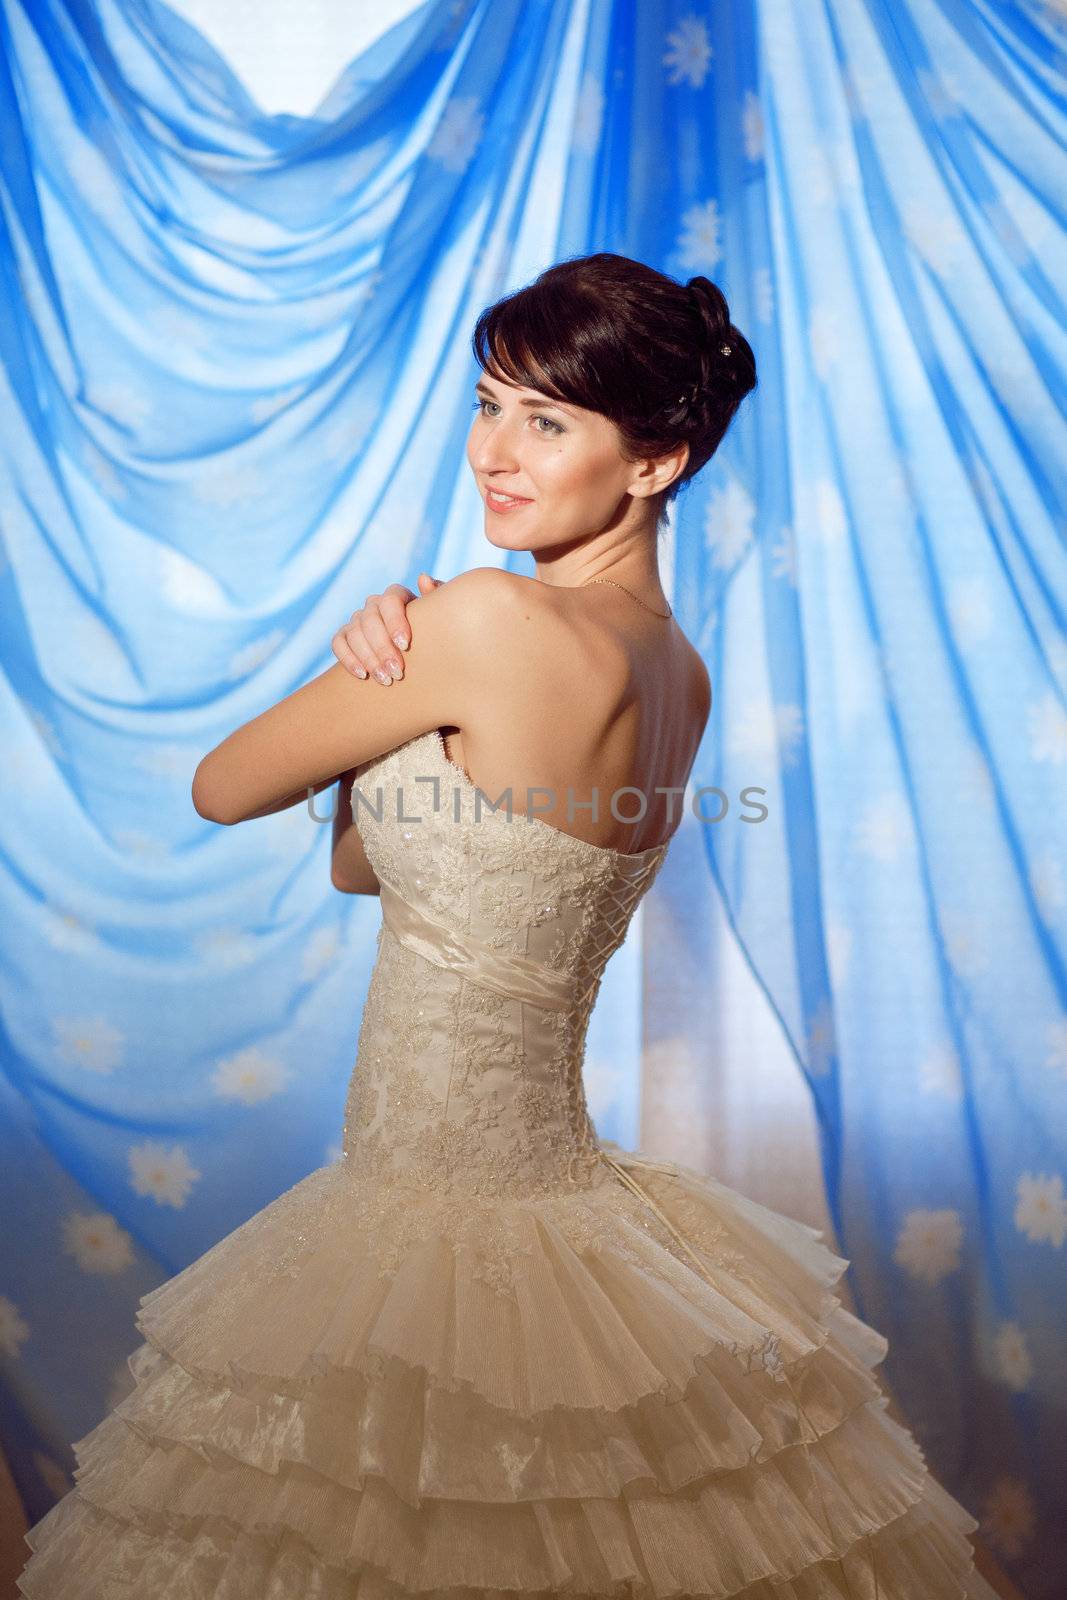 happy bride showing her dress